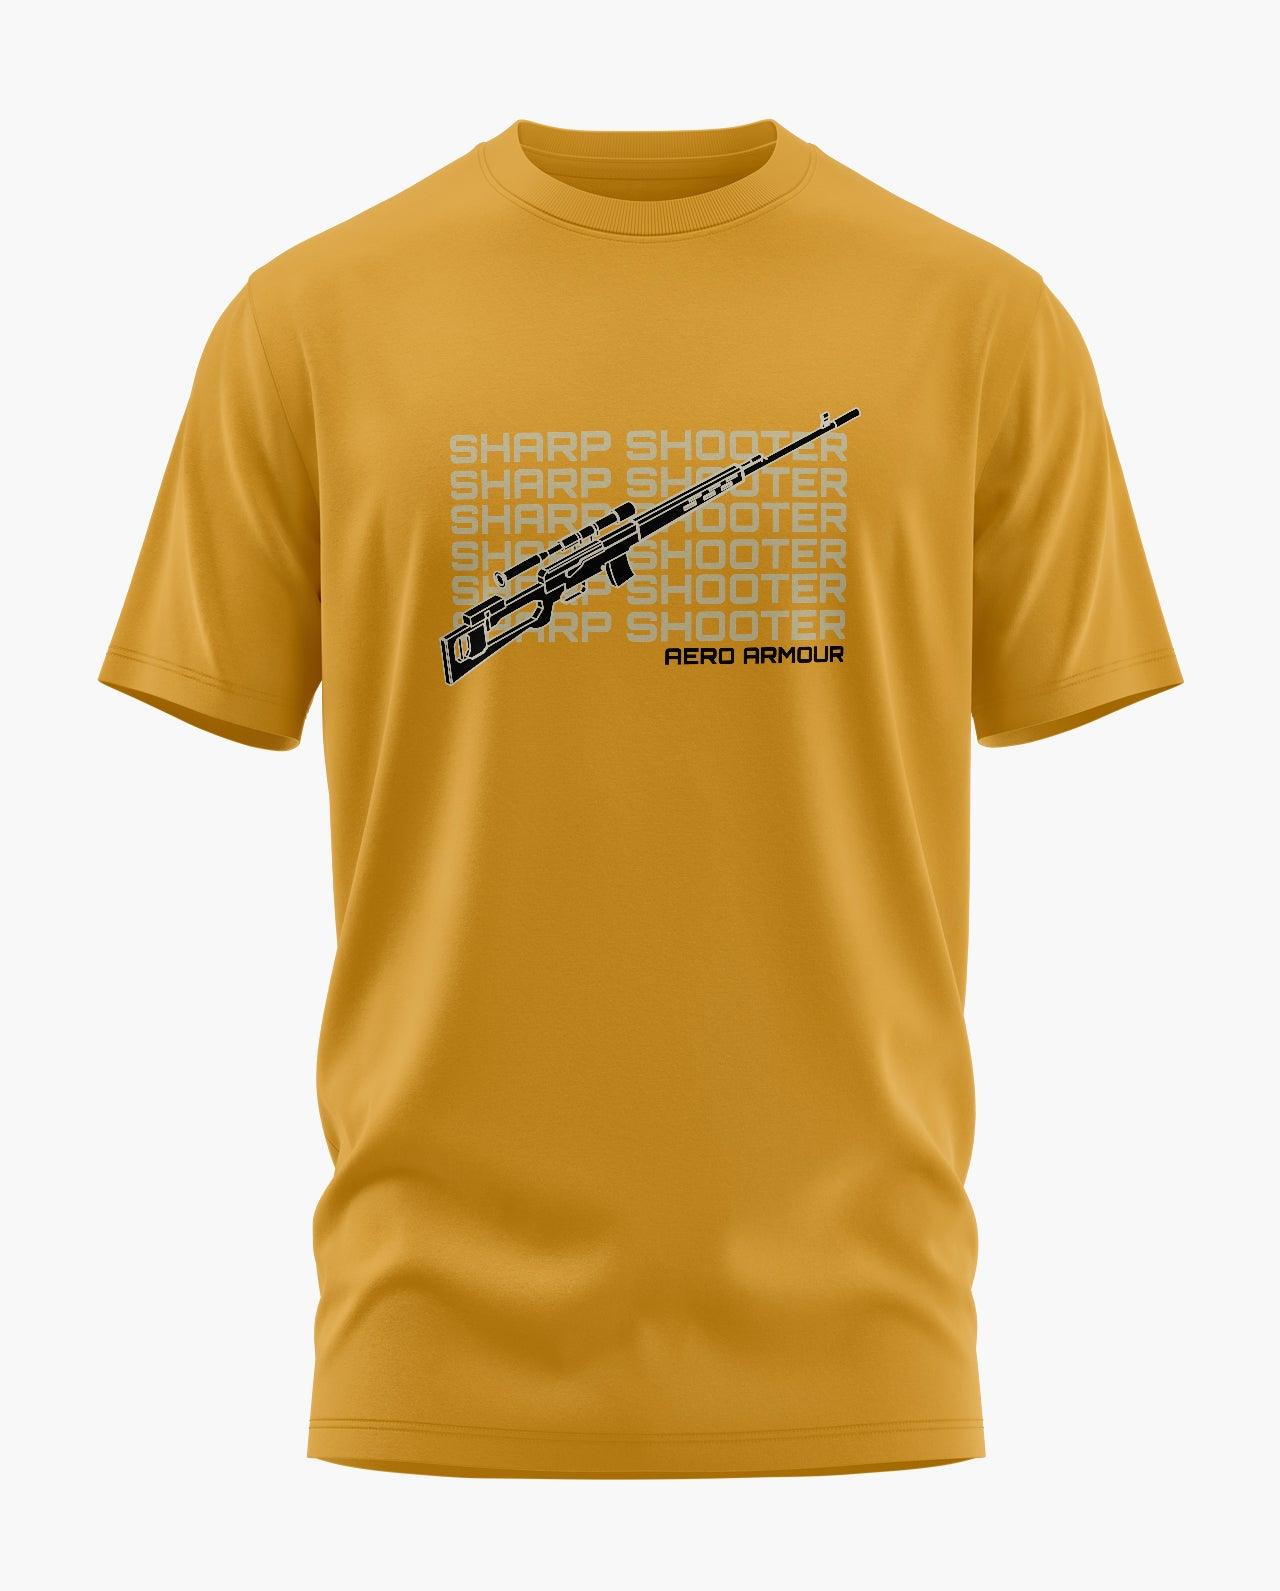 Sharpshooter T-Shirt - Aero Armour